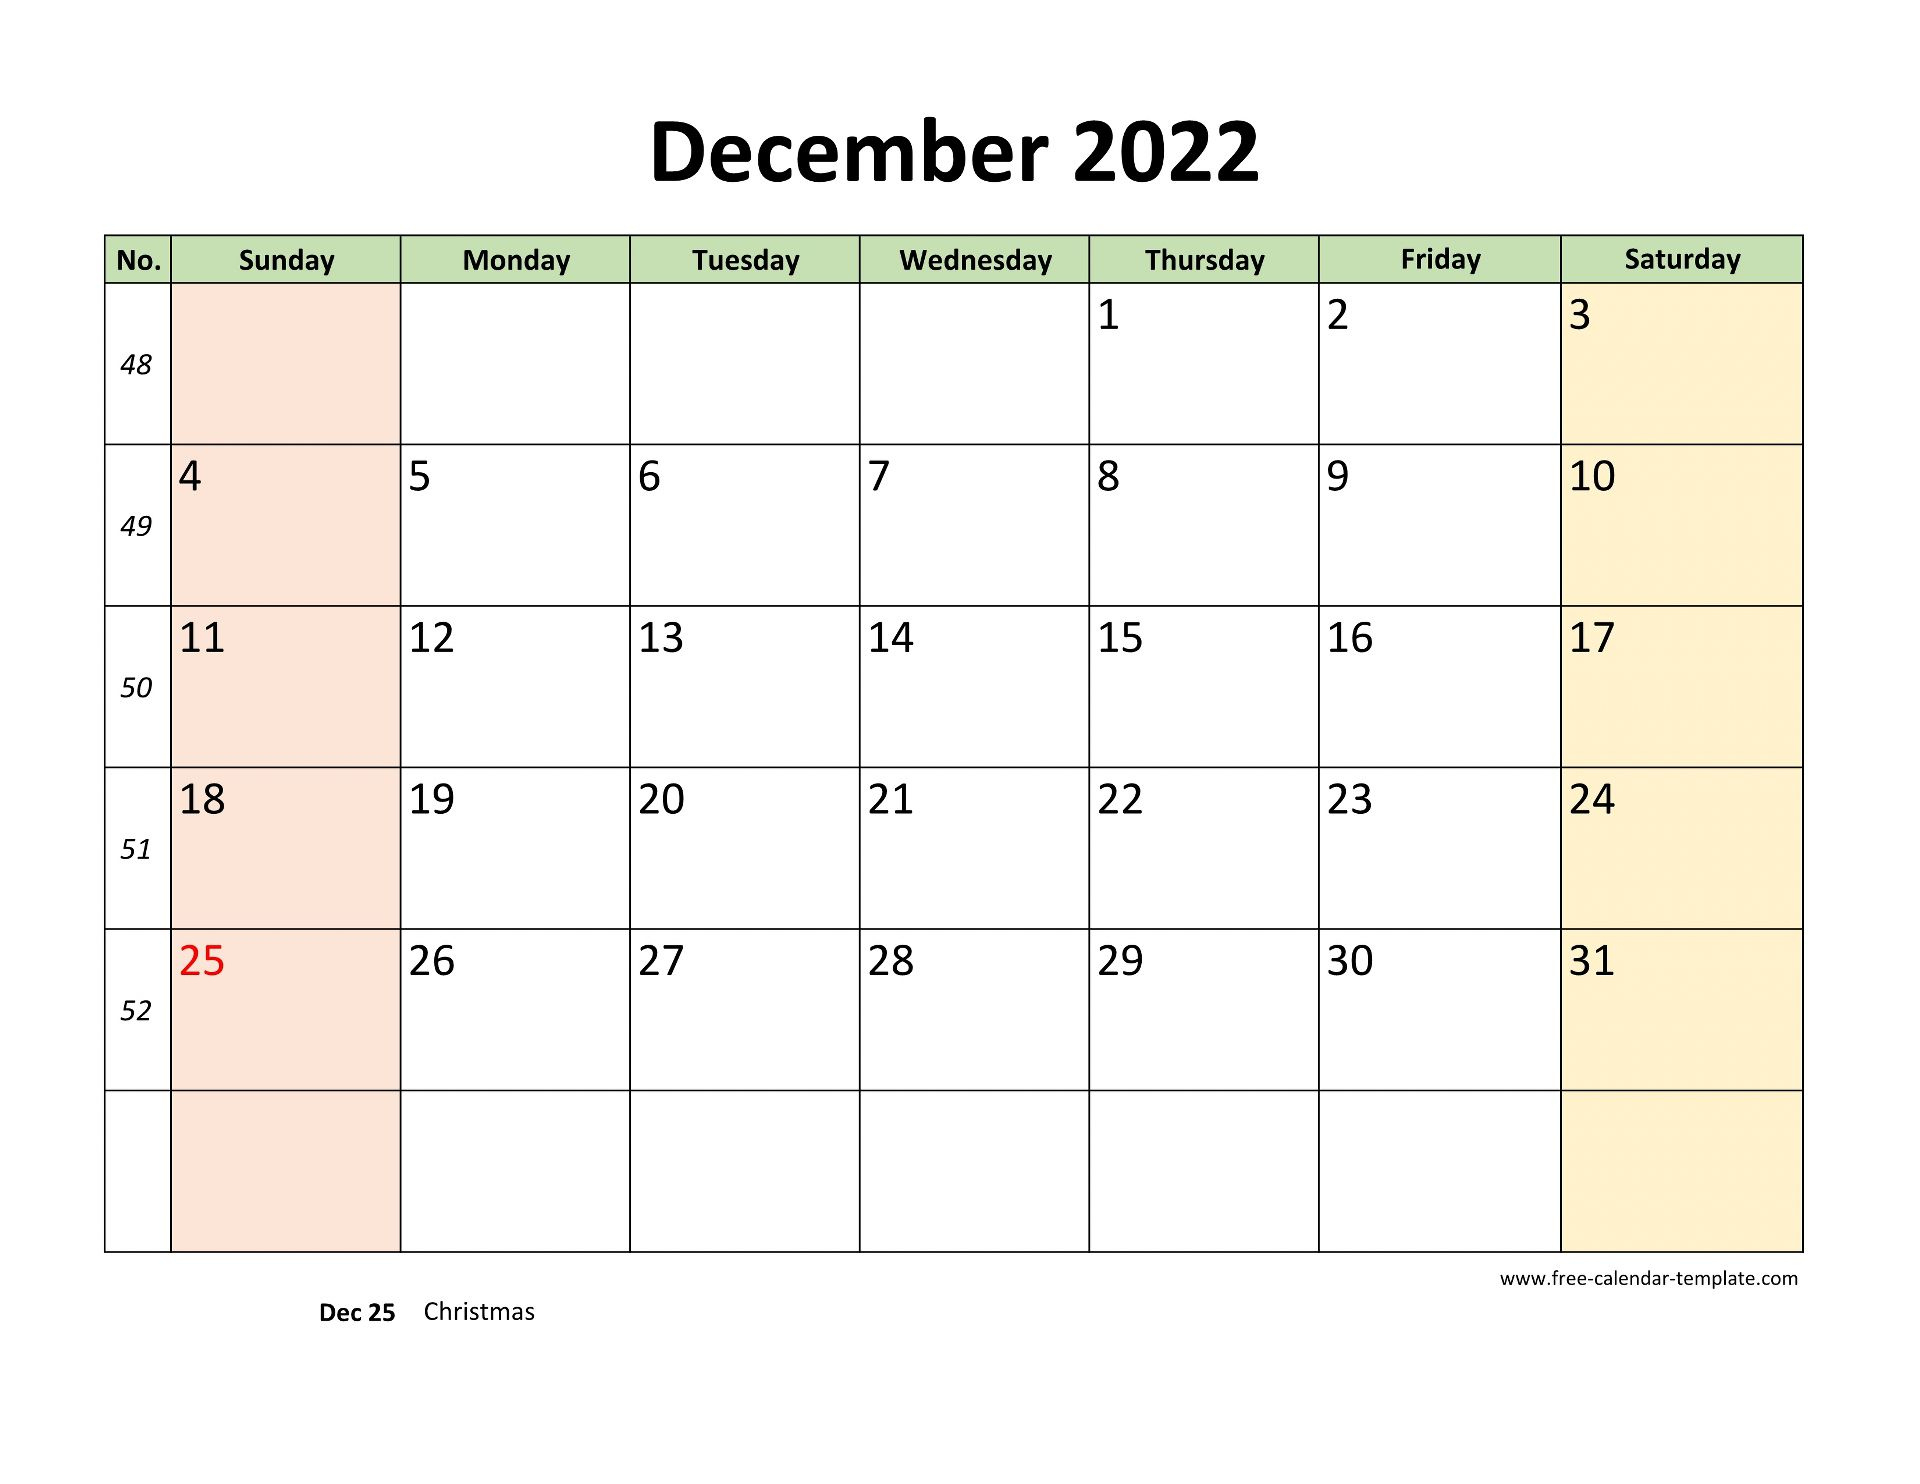 December 2022 Free Calendar Tempplate | Free-Calendar December Printable Calendar 2022